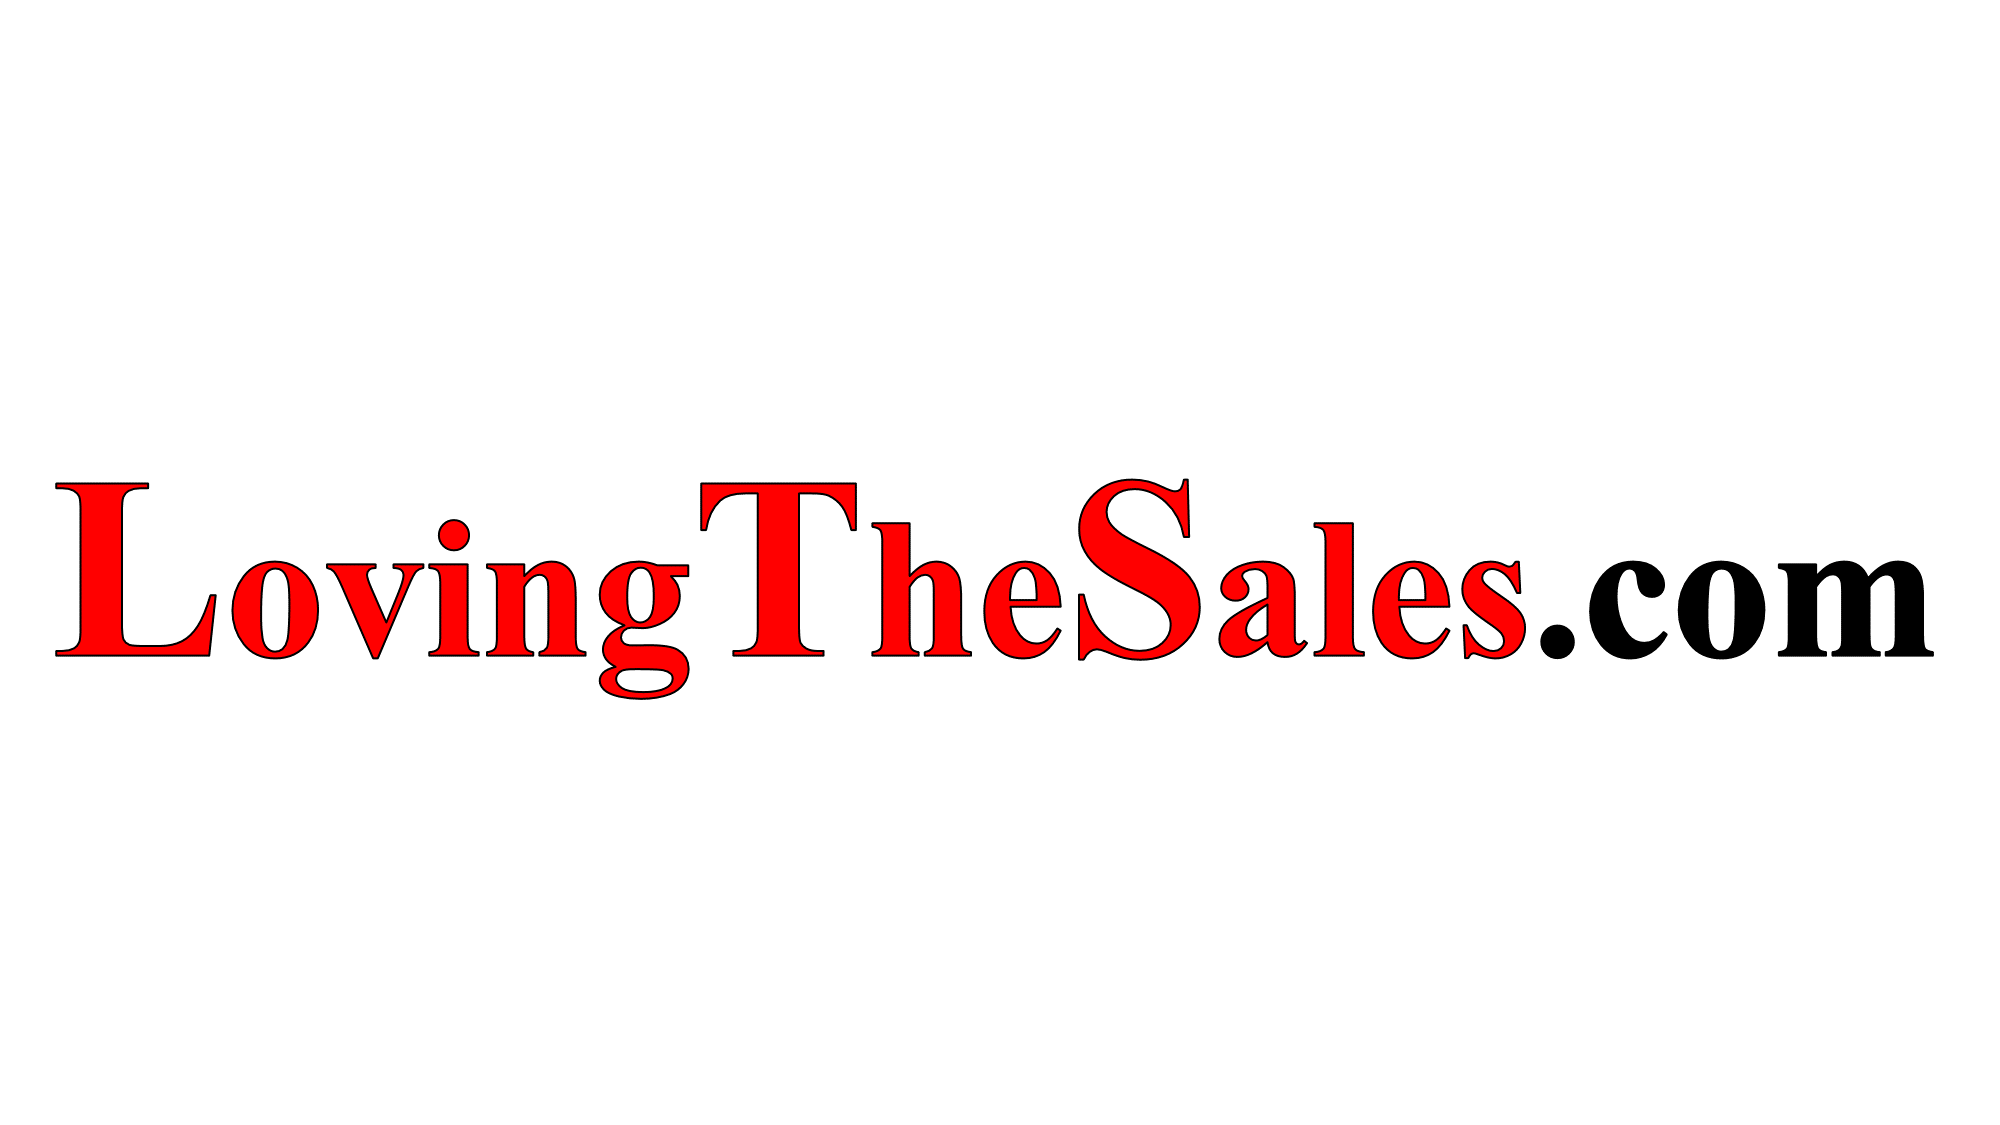 LovingTheSales.com Logo Red on Whitre Background